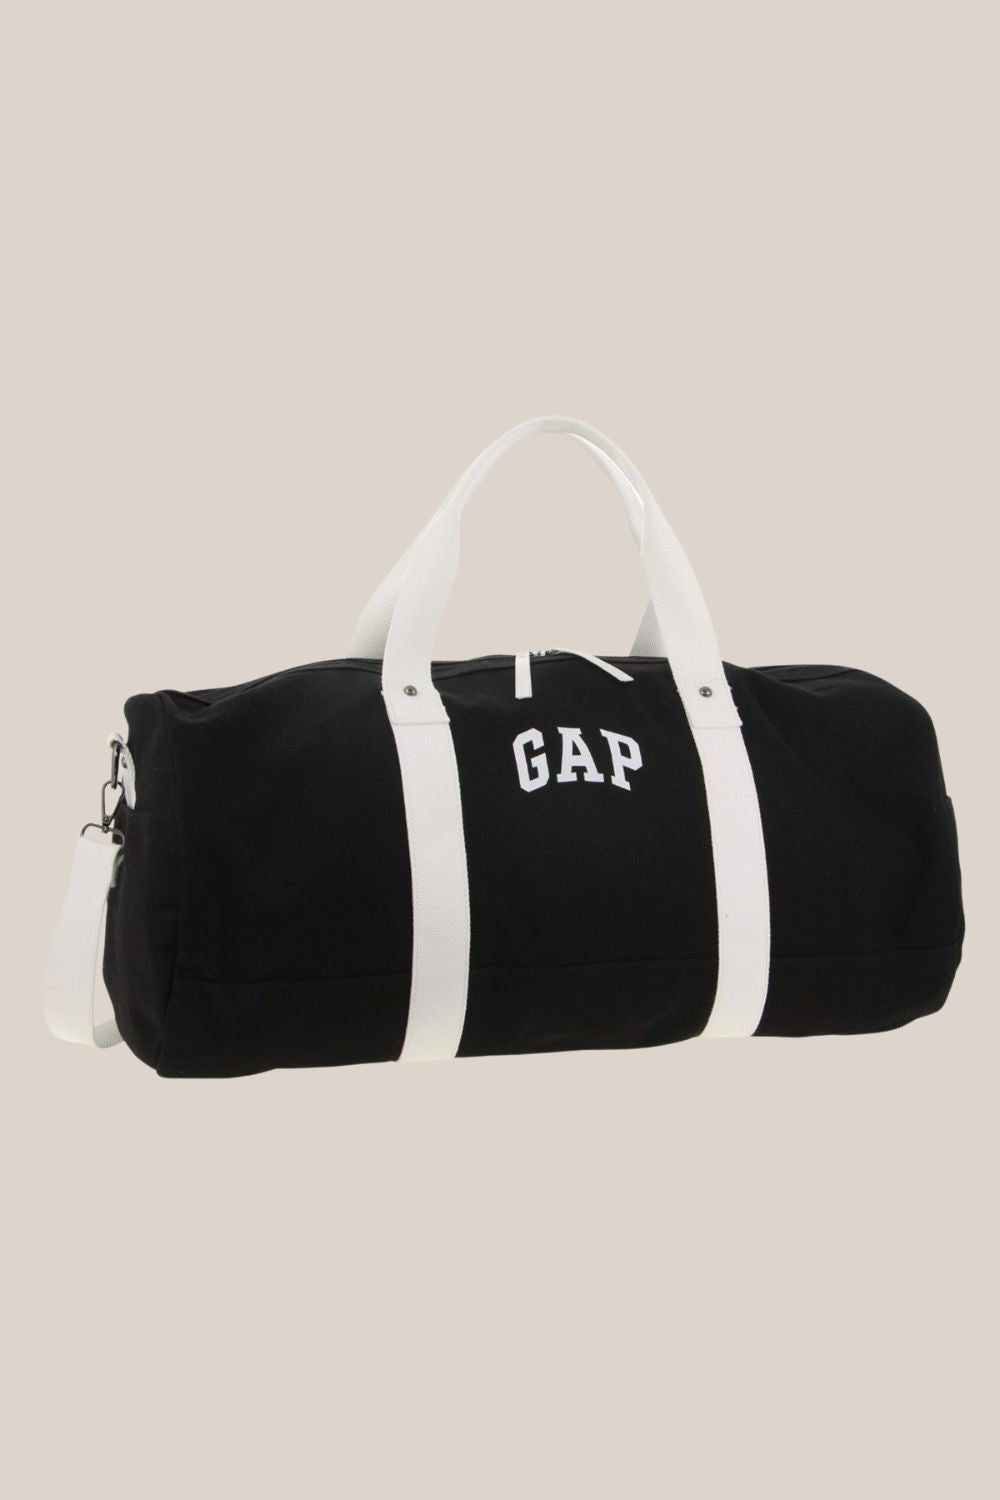 Gap Canvas Heritage Duffle Bag